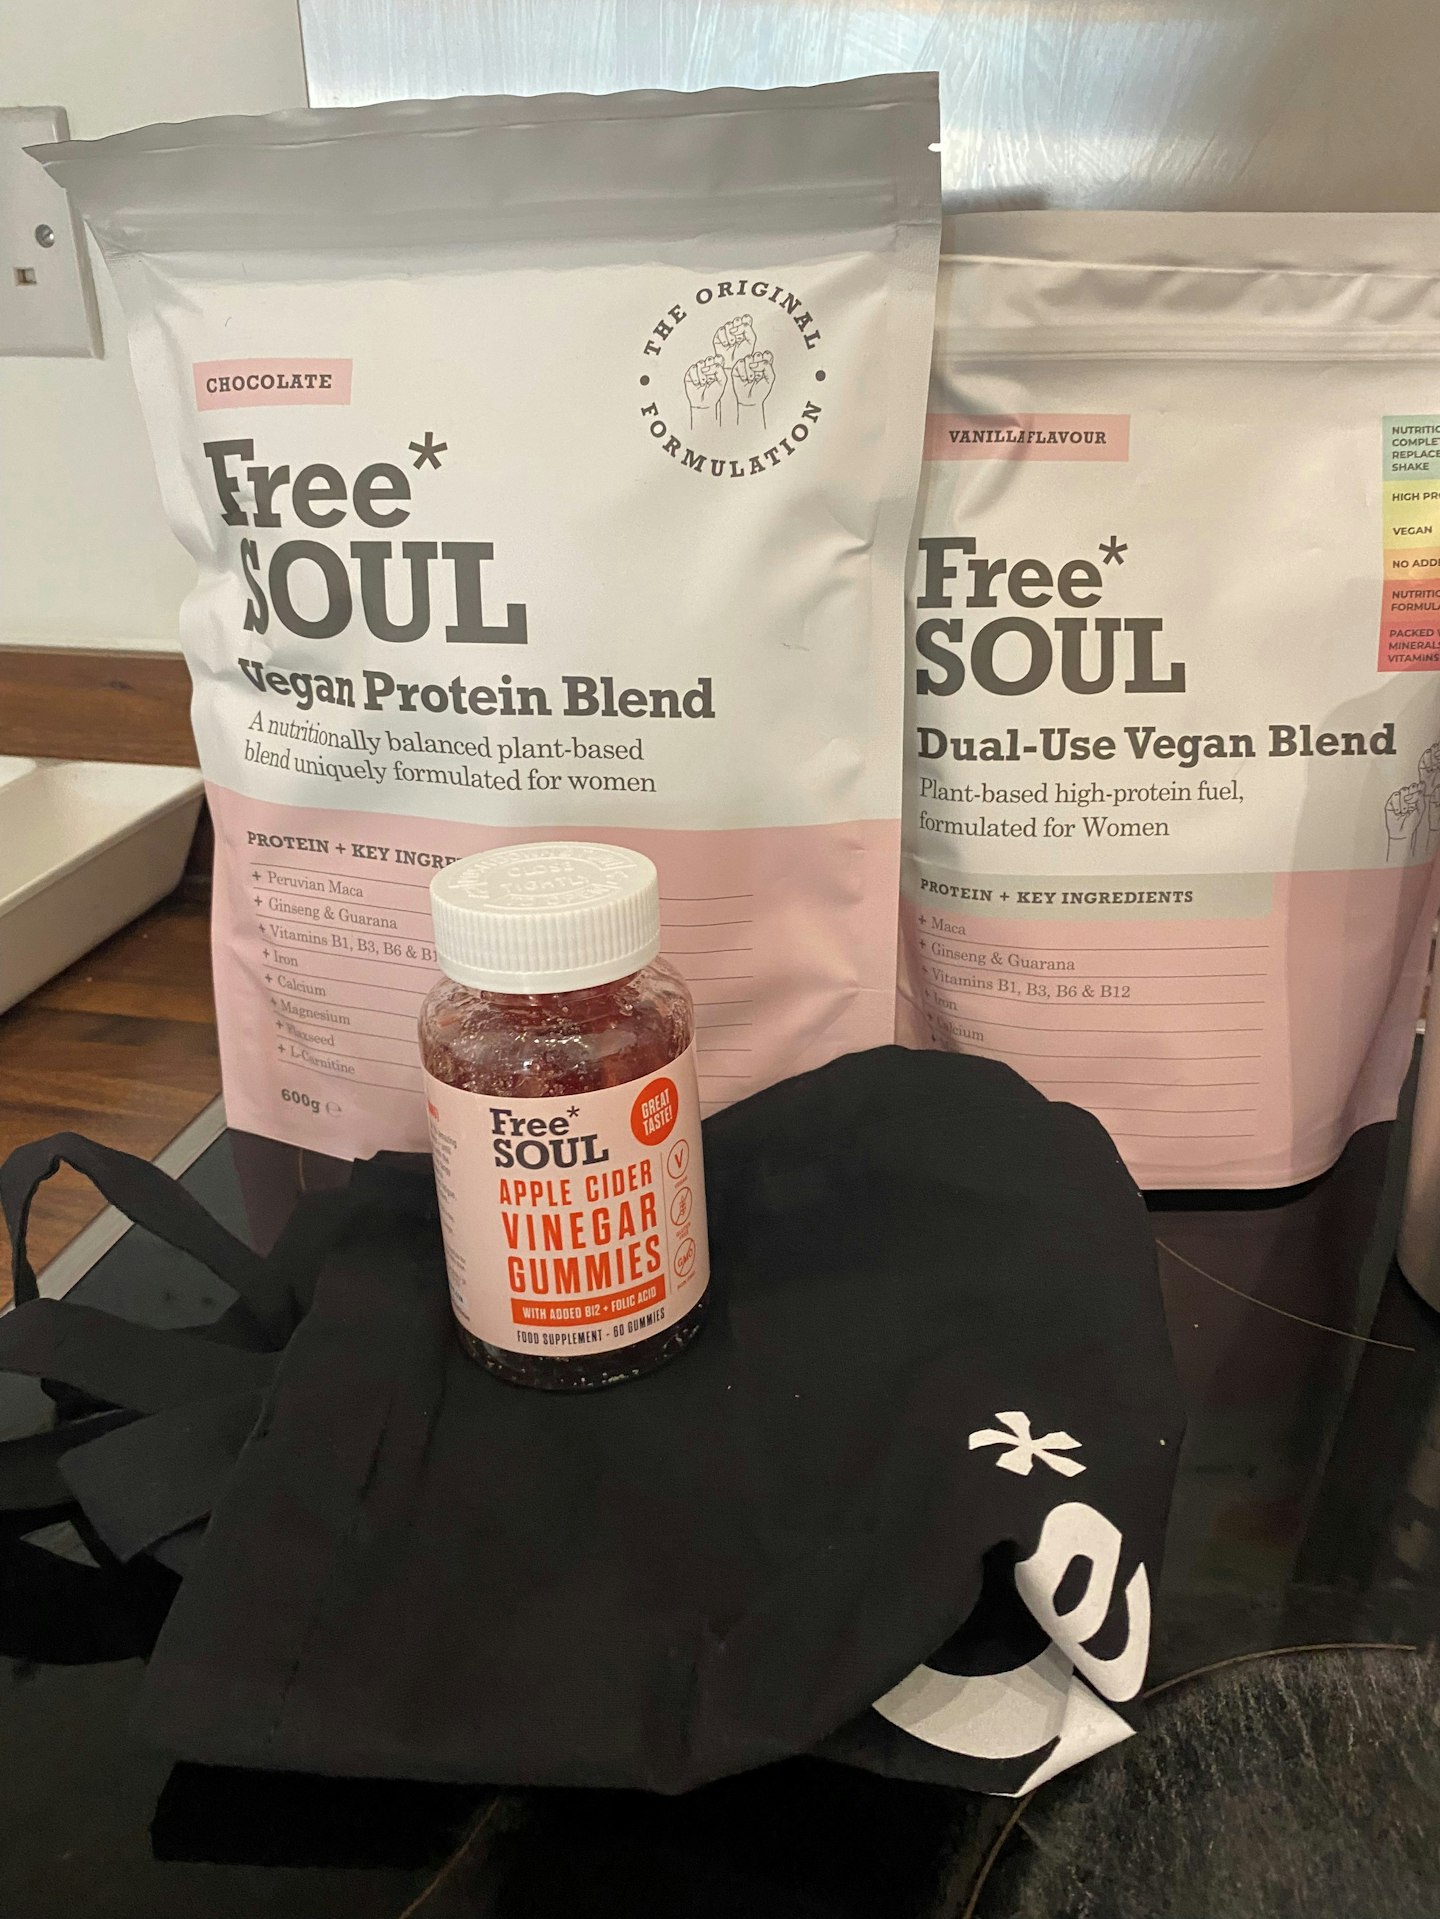 An image of Free Soul's vegan protein blend, dual-use vegan blend and apple cider vinegar gummy bears